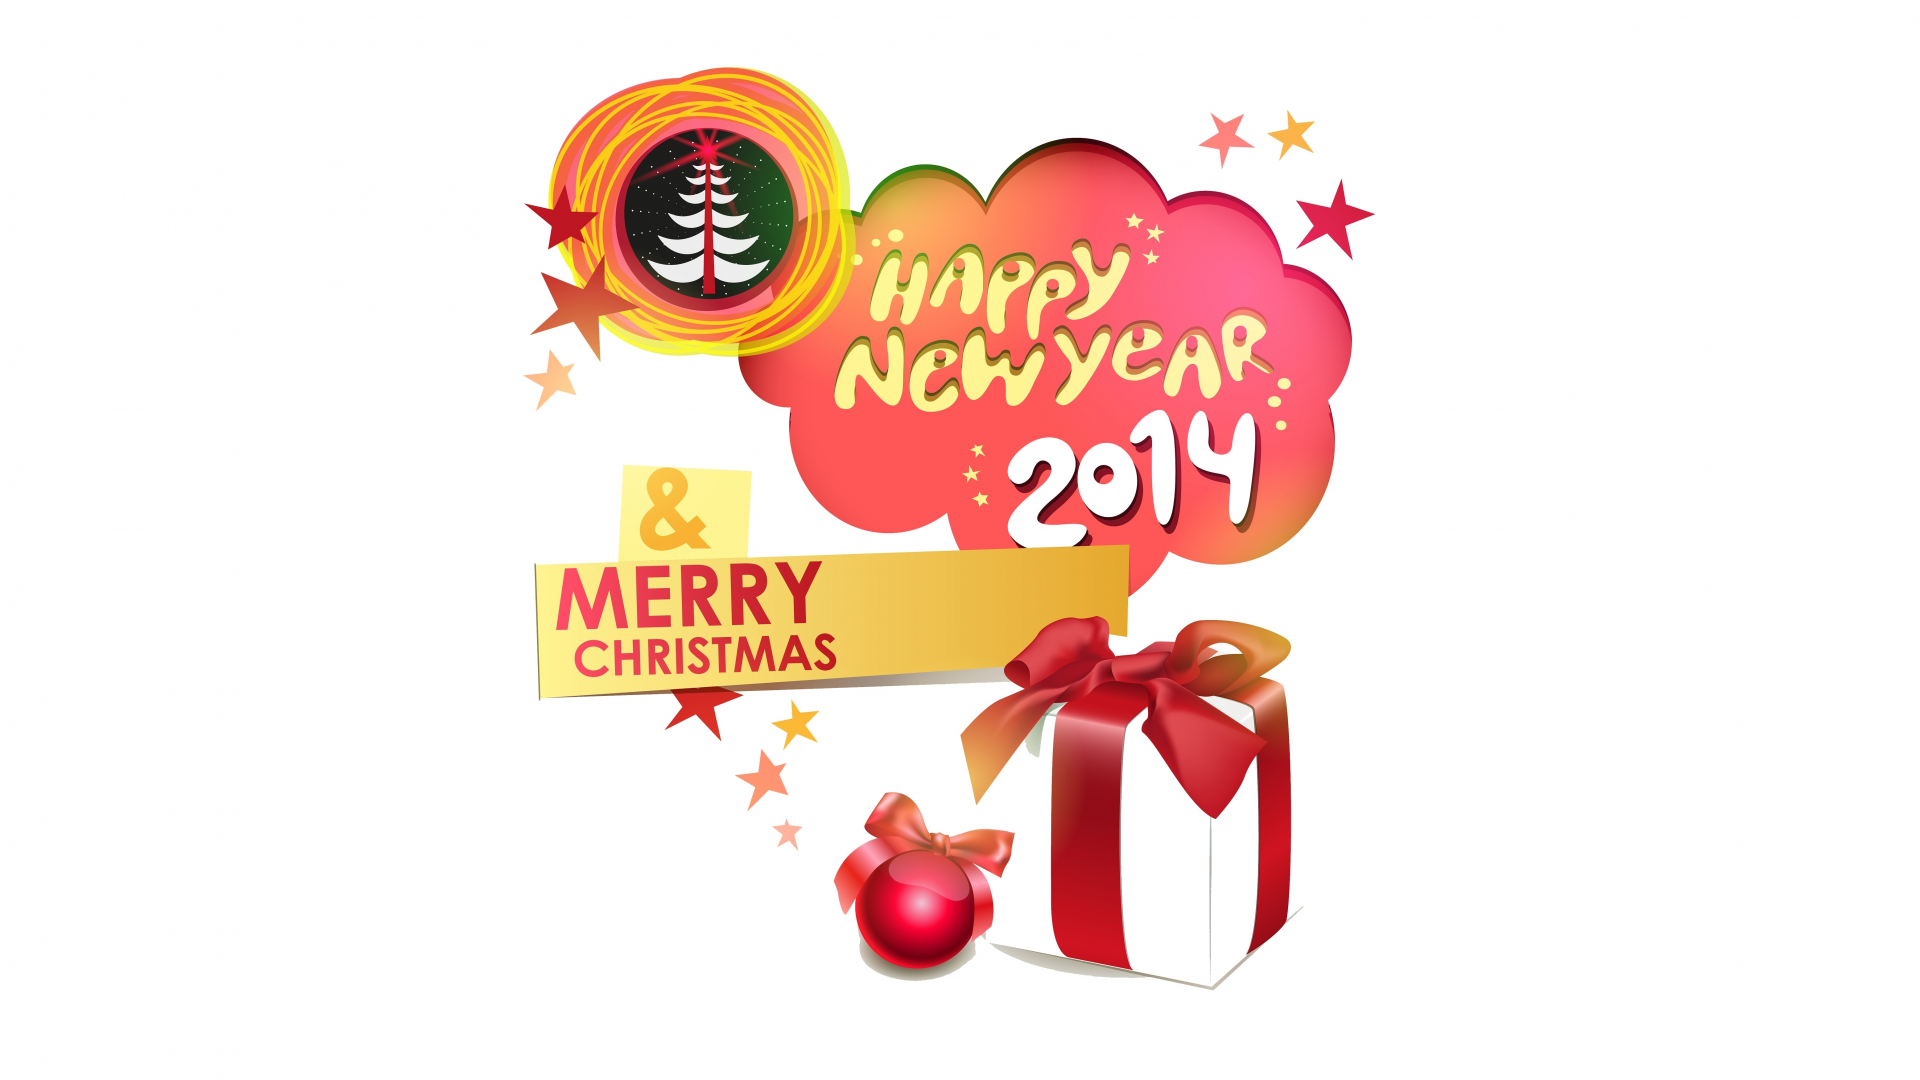 stars, gifts, 2014, 2014, happy new year, christmas, christmas tree